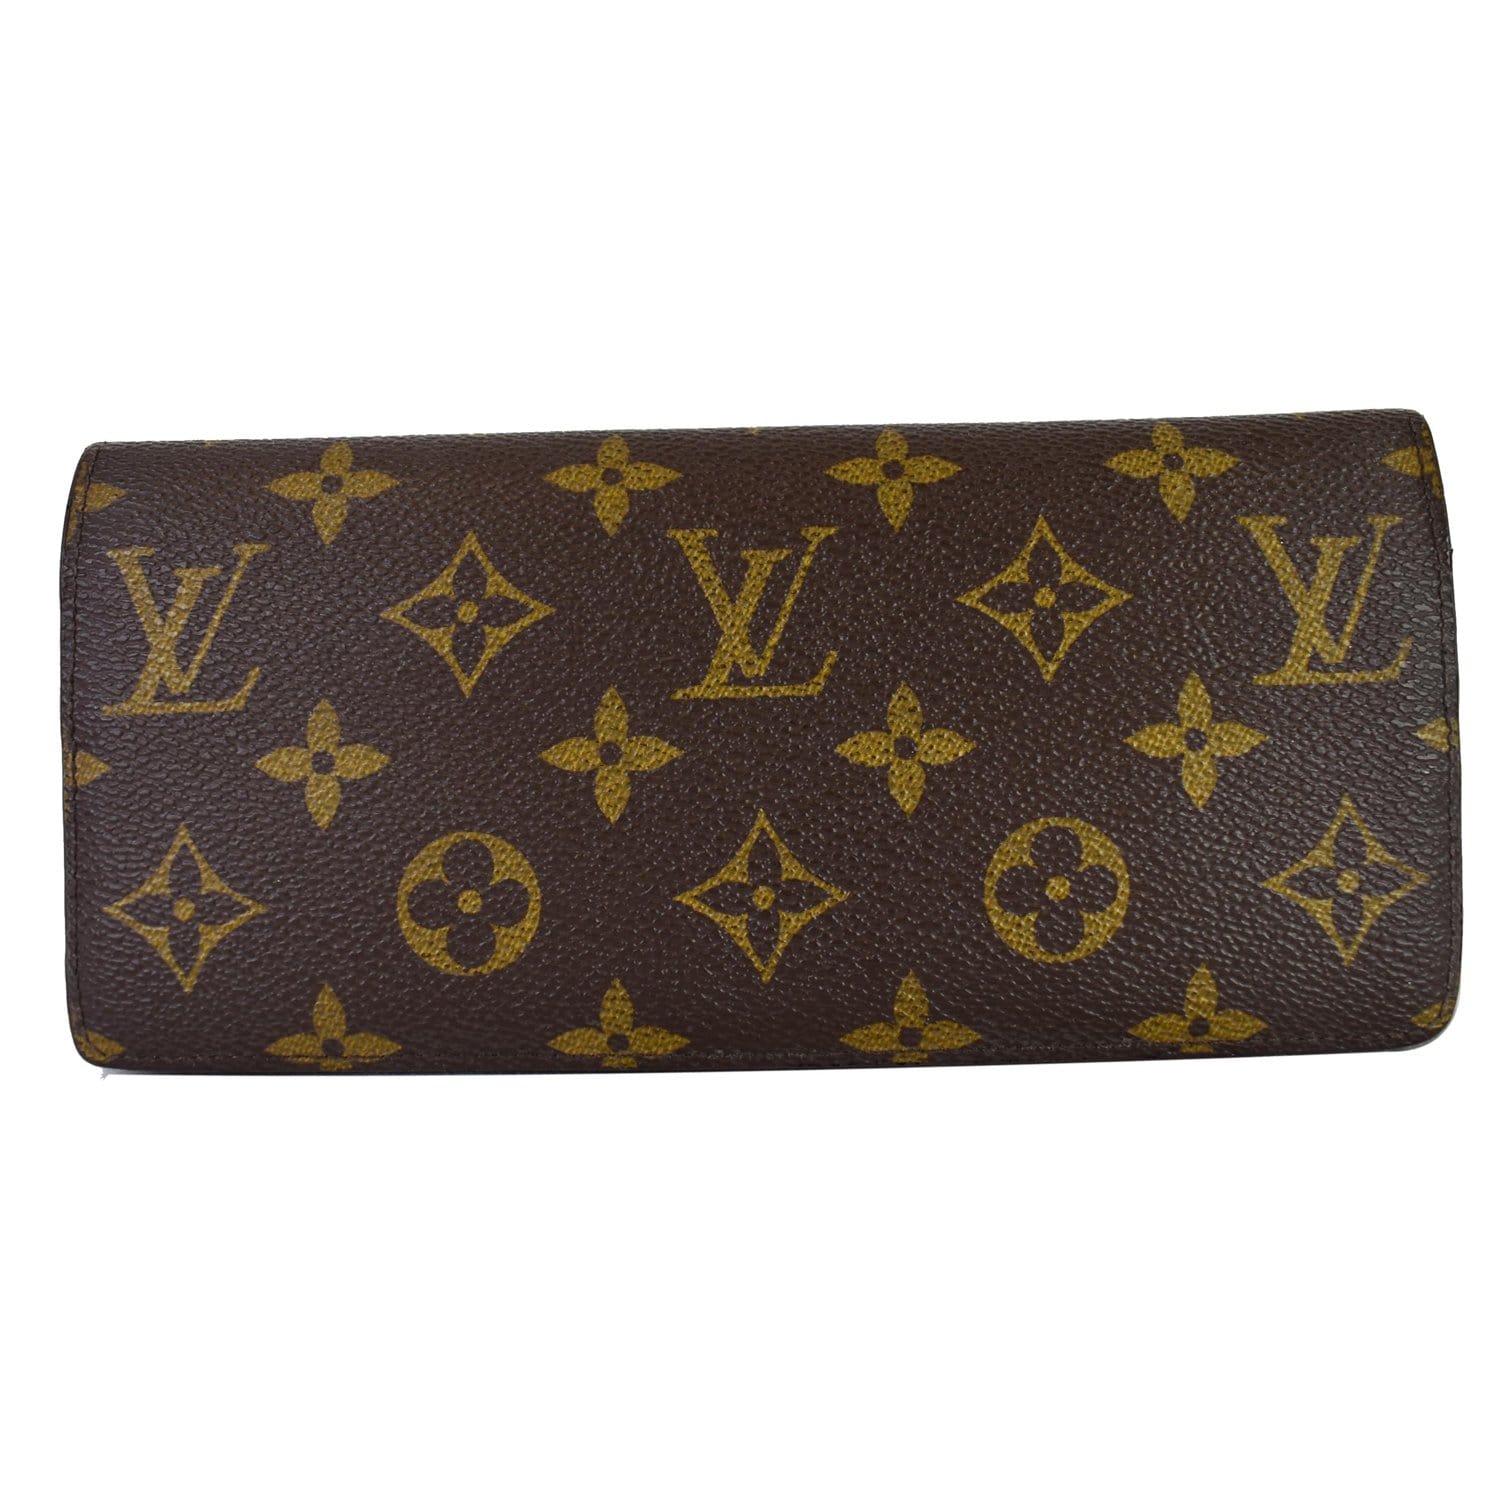 $425 LOUIS VUITTON Emilie wallet (retail $545, comes with